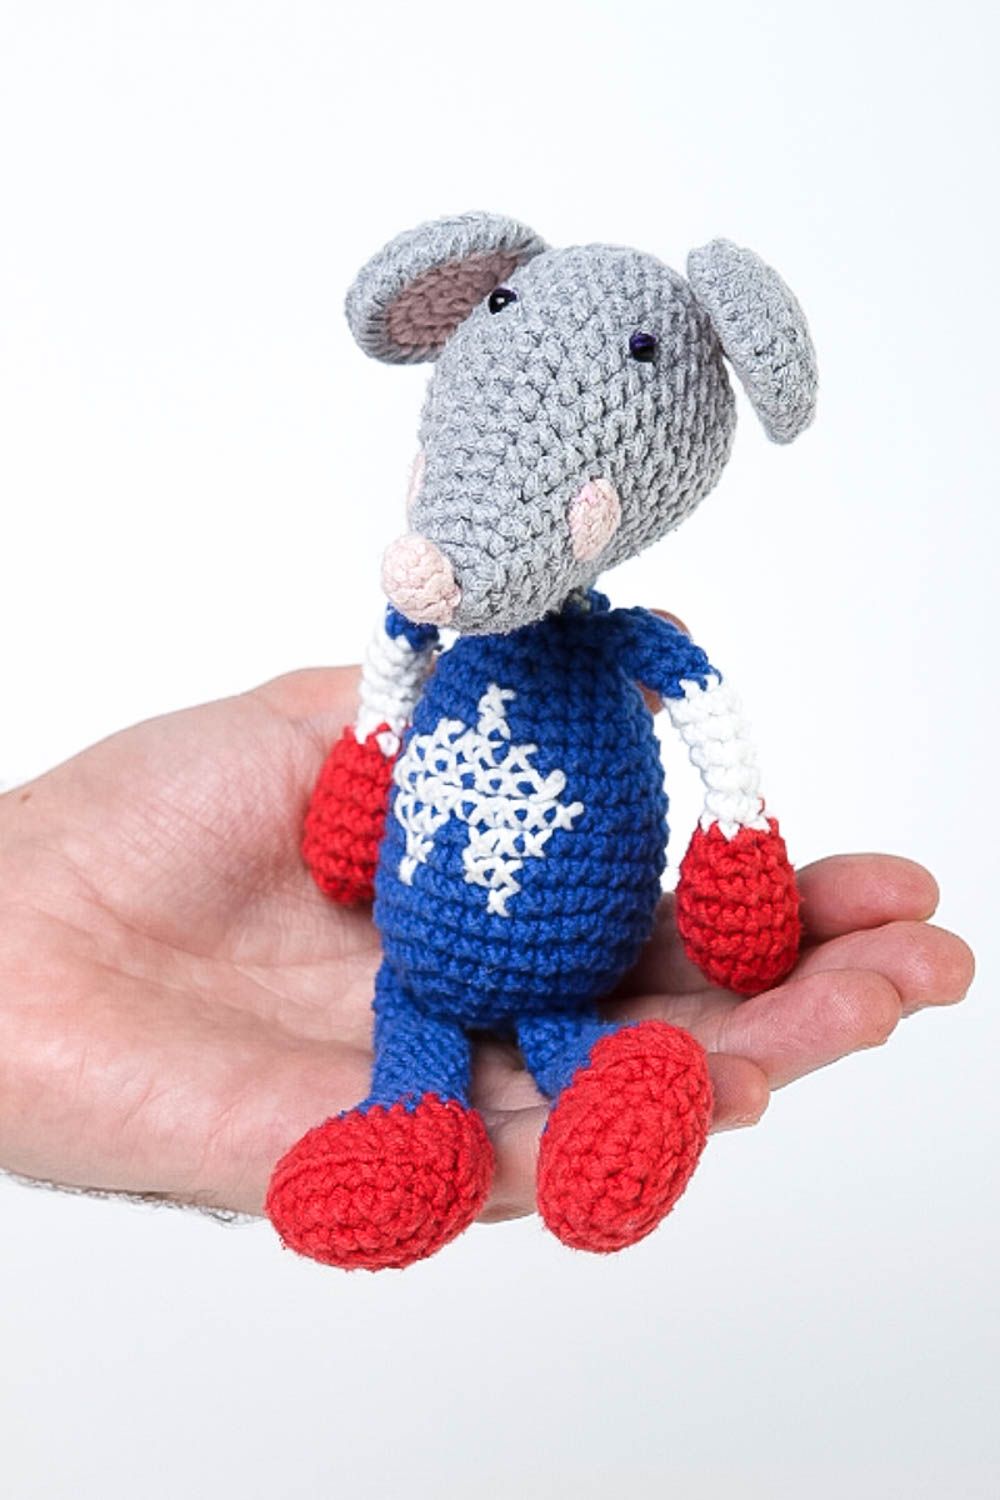 Handmade crocheted toy for children crocheted doll nursery decor ideas photo 5